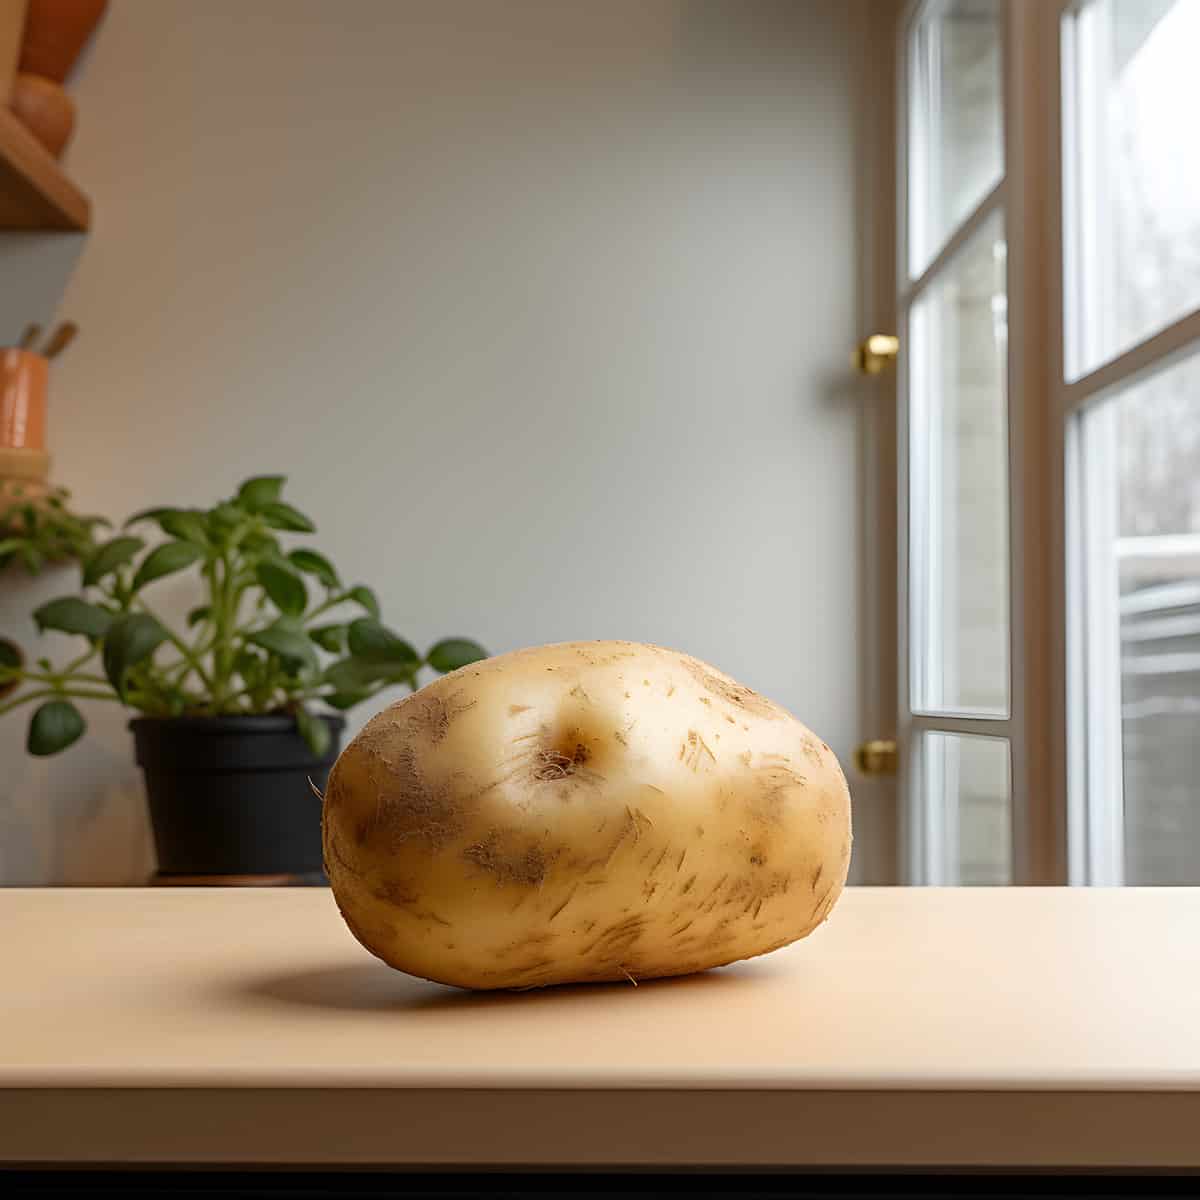 Bintje Potatoes on a kitchen counter